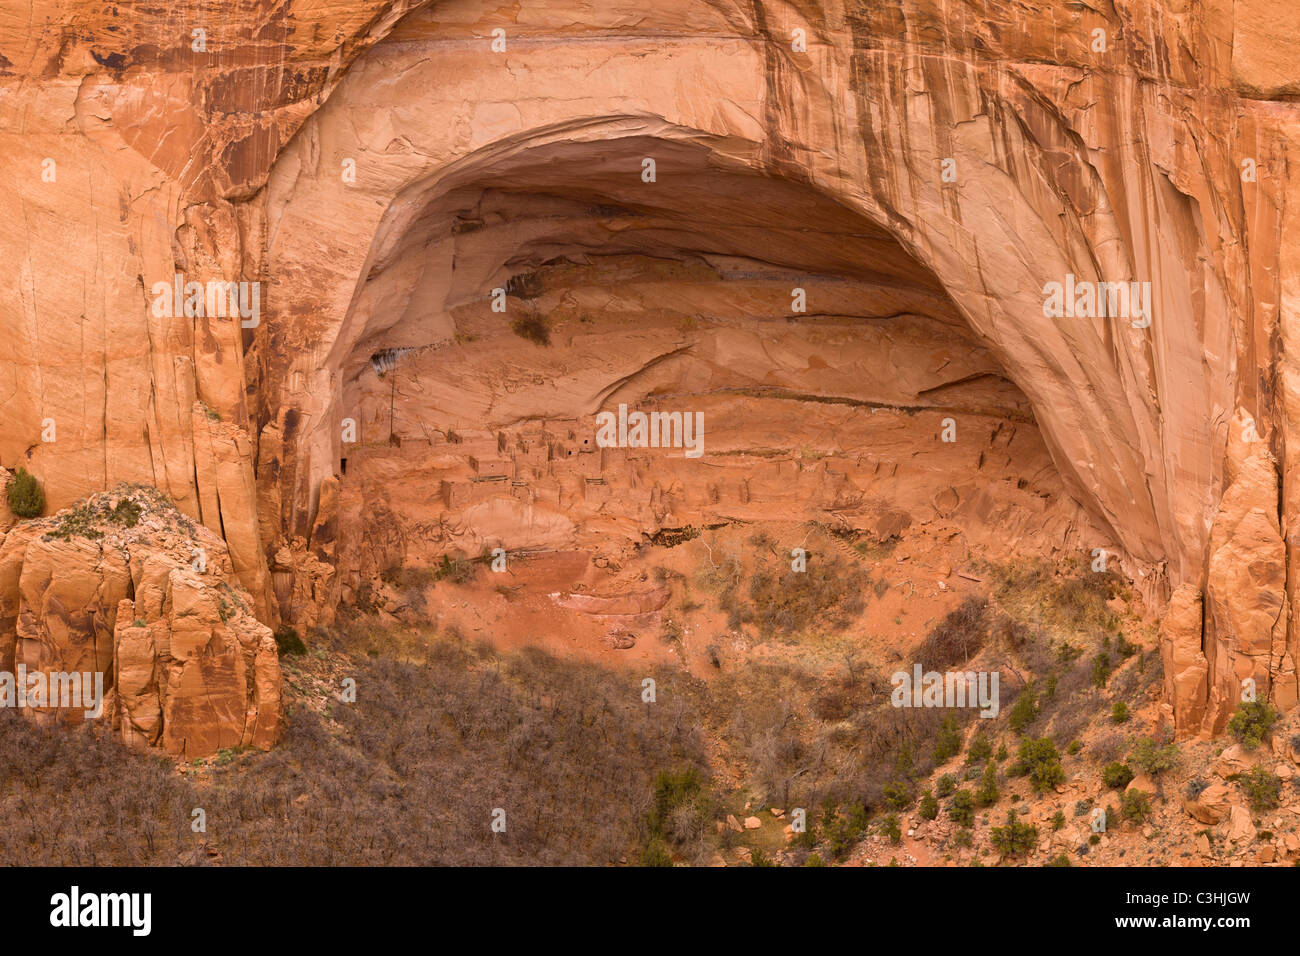 Betatakin Ruin, meaning 'House Built on a Ledge' in Navajo, Navajo National Monument, Arizona, USA. Stock Photo